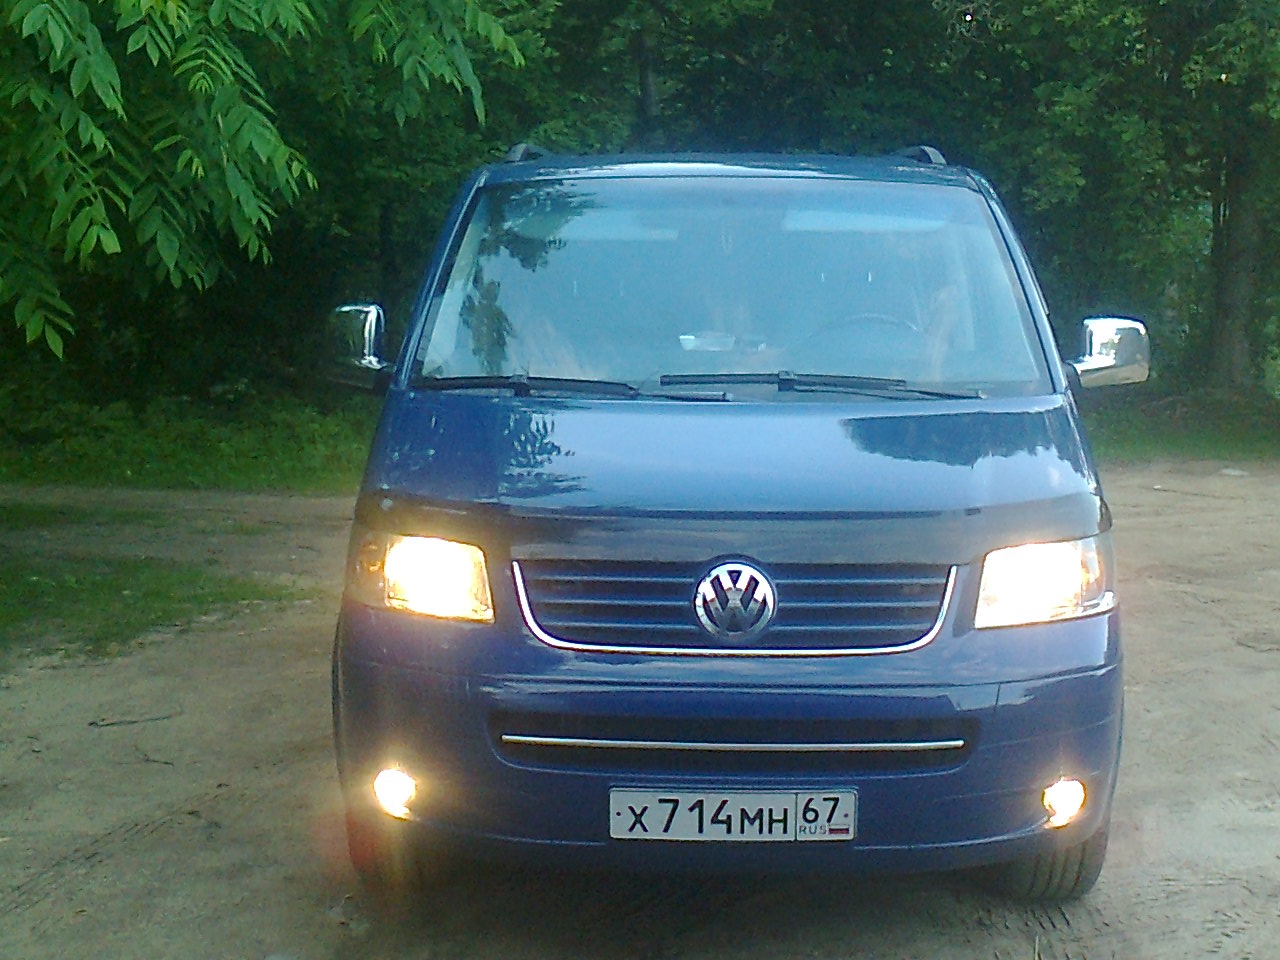 Фото Volkswagen Transporter 2006 года выпуска